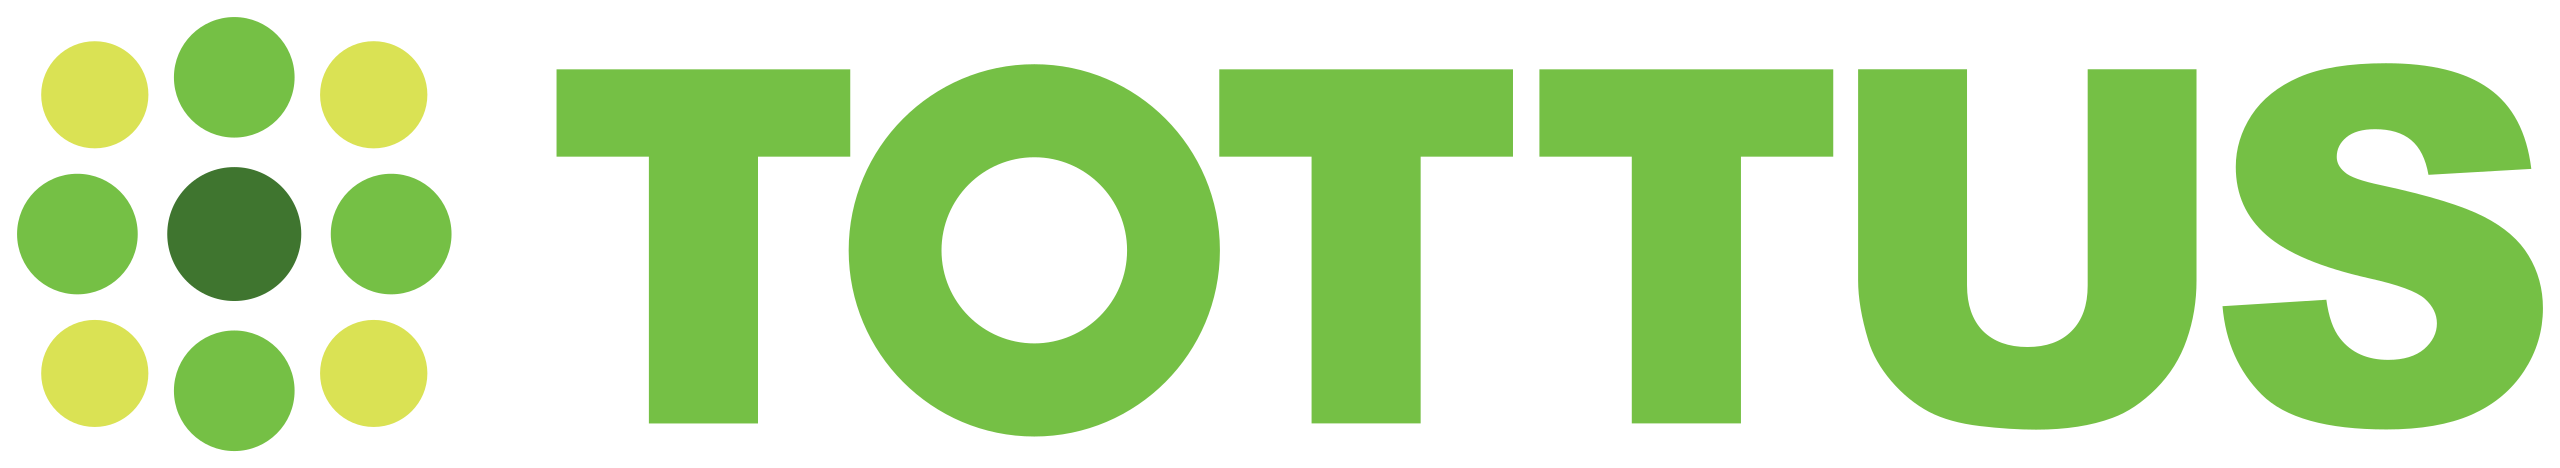 Logotipo_Tottus.svg